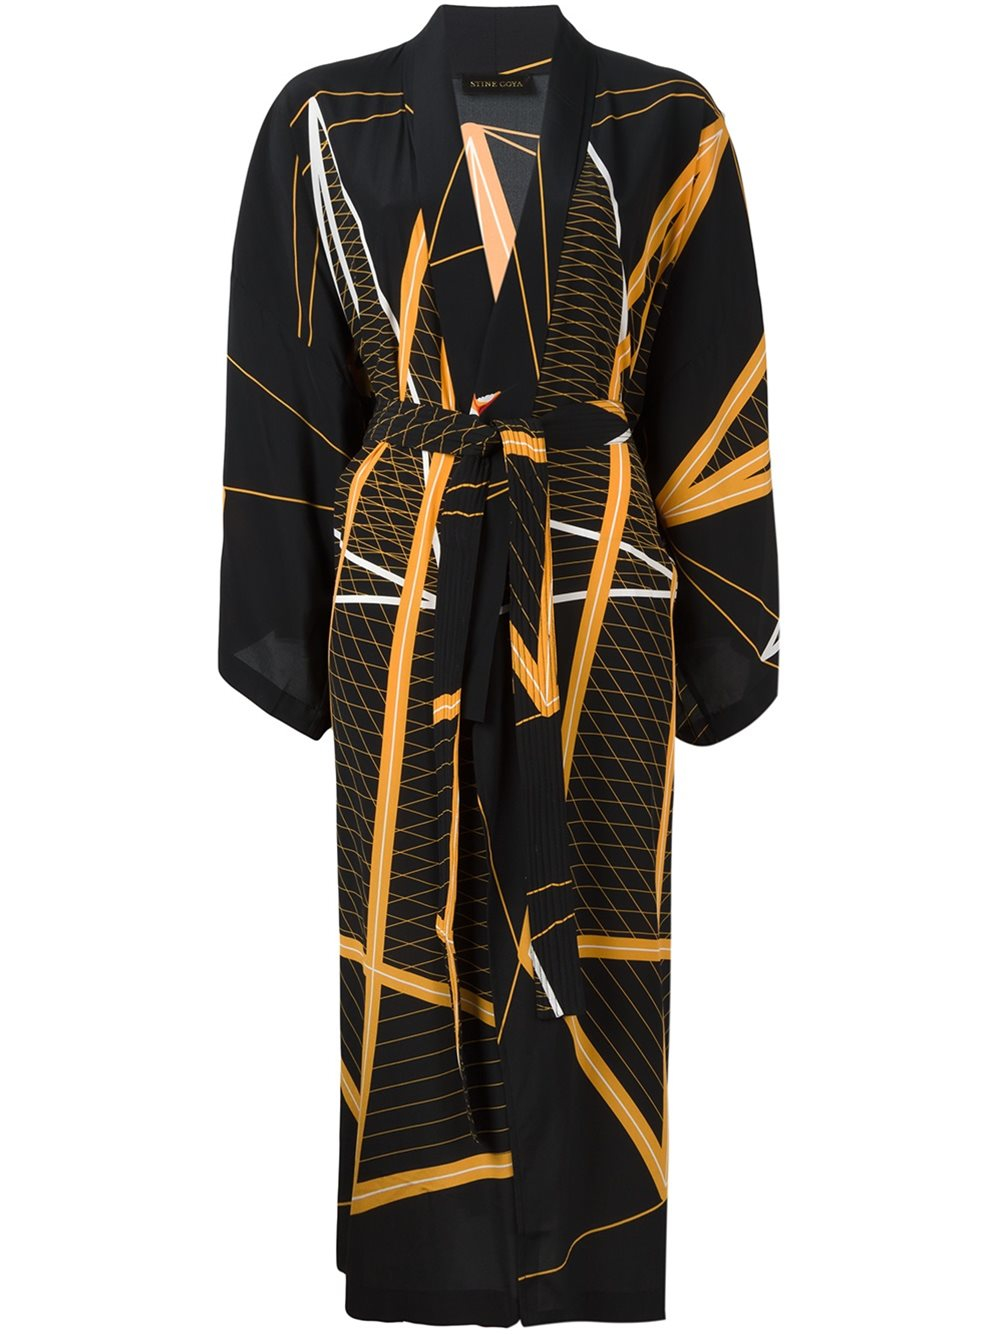 Stine Goya Silk 'Birdcage' Kimono-style Coat in Black - Lyst